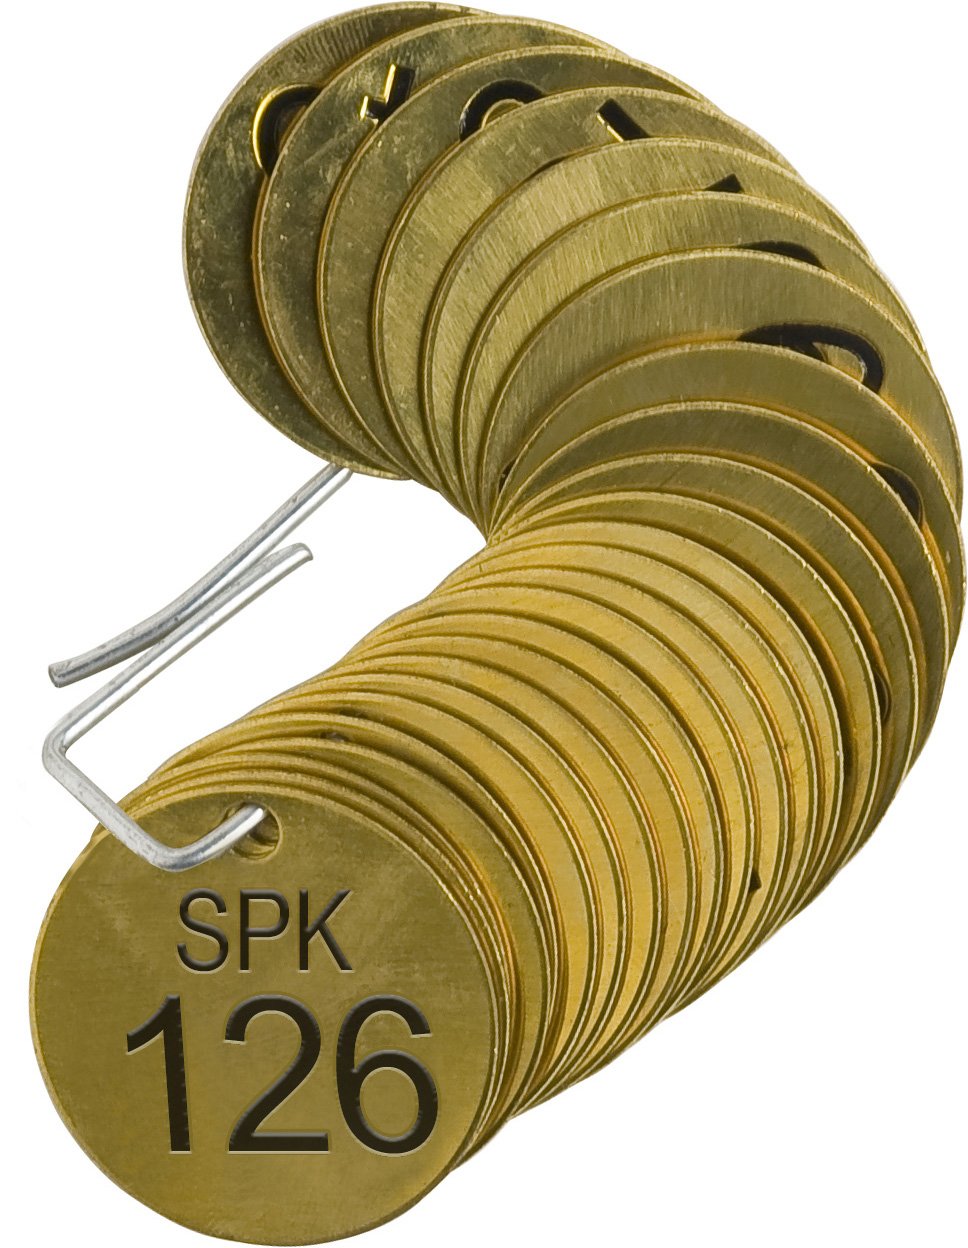  [AUSTRALIA] - Brady 23632 1 1/2" Diameter, Stamped Brass Valve Tags, Numbers 126-150, Legend "SPK" (Pack of 25 Tags)